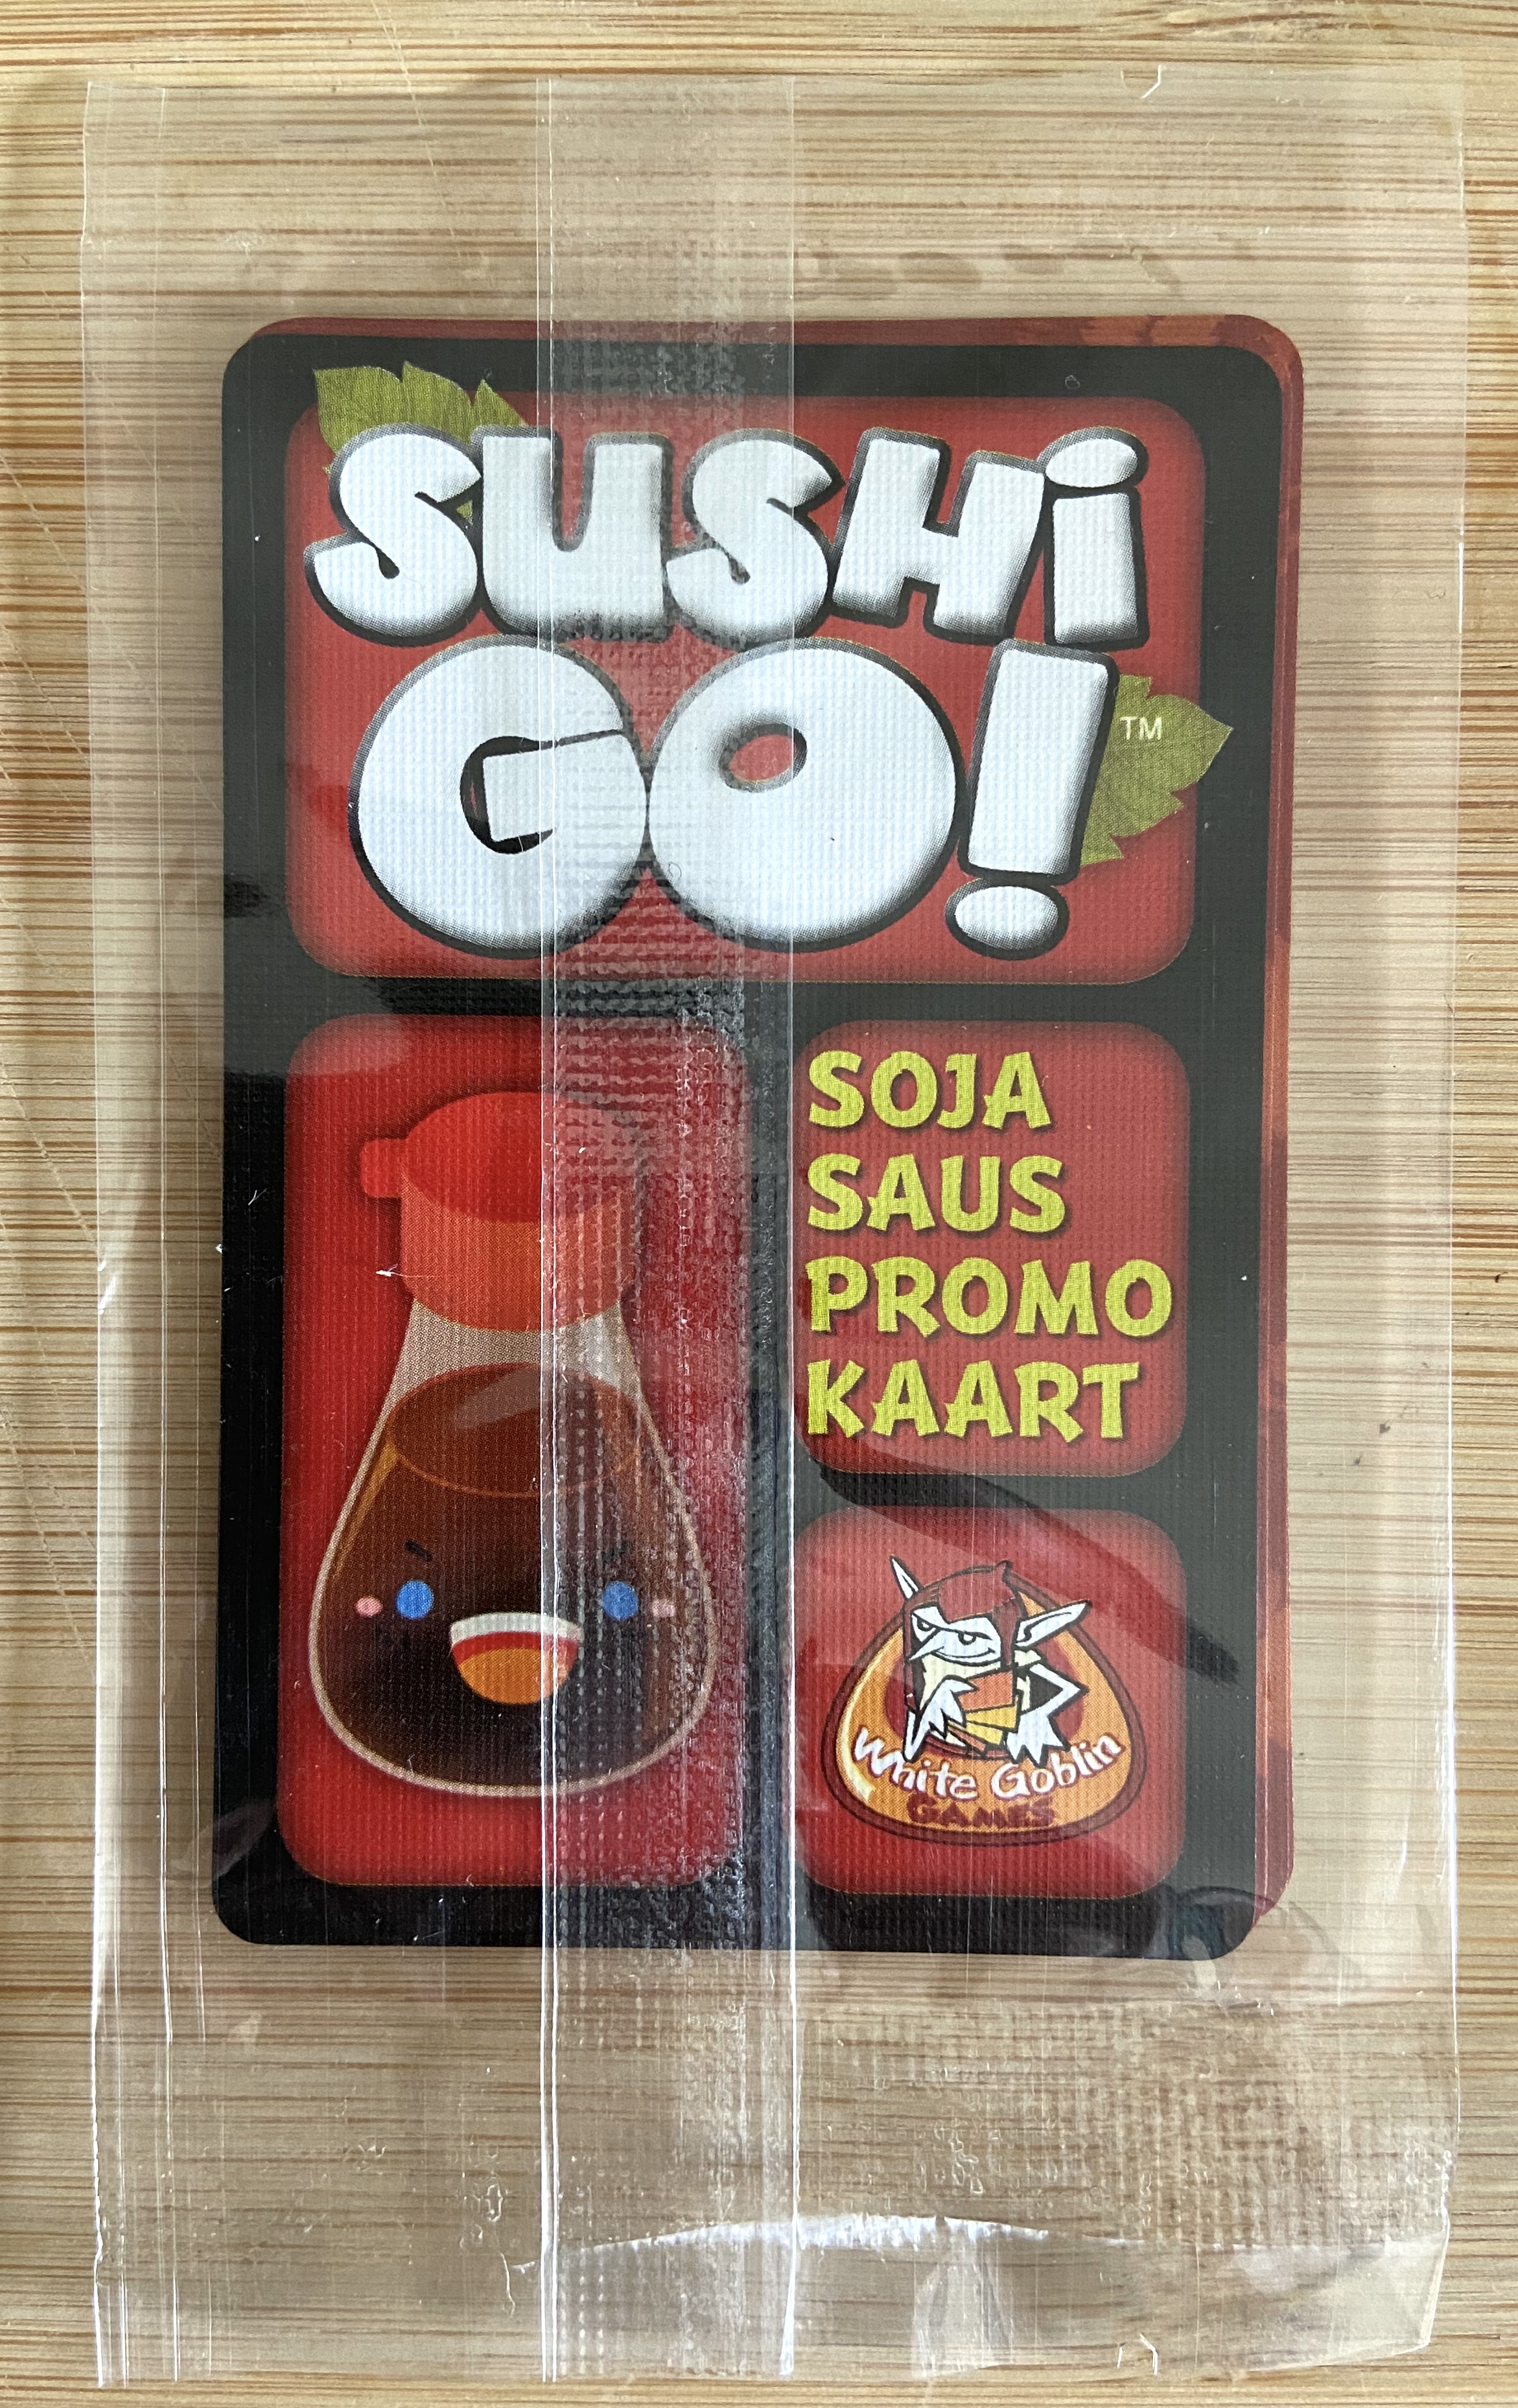 Sushi Go!: Soja Saus Promo Kaart